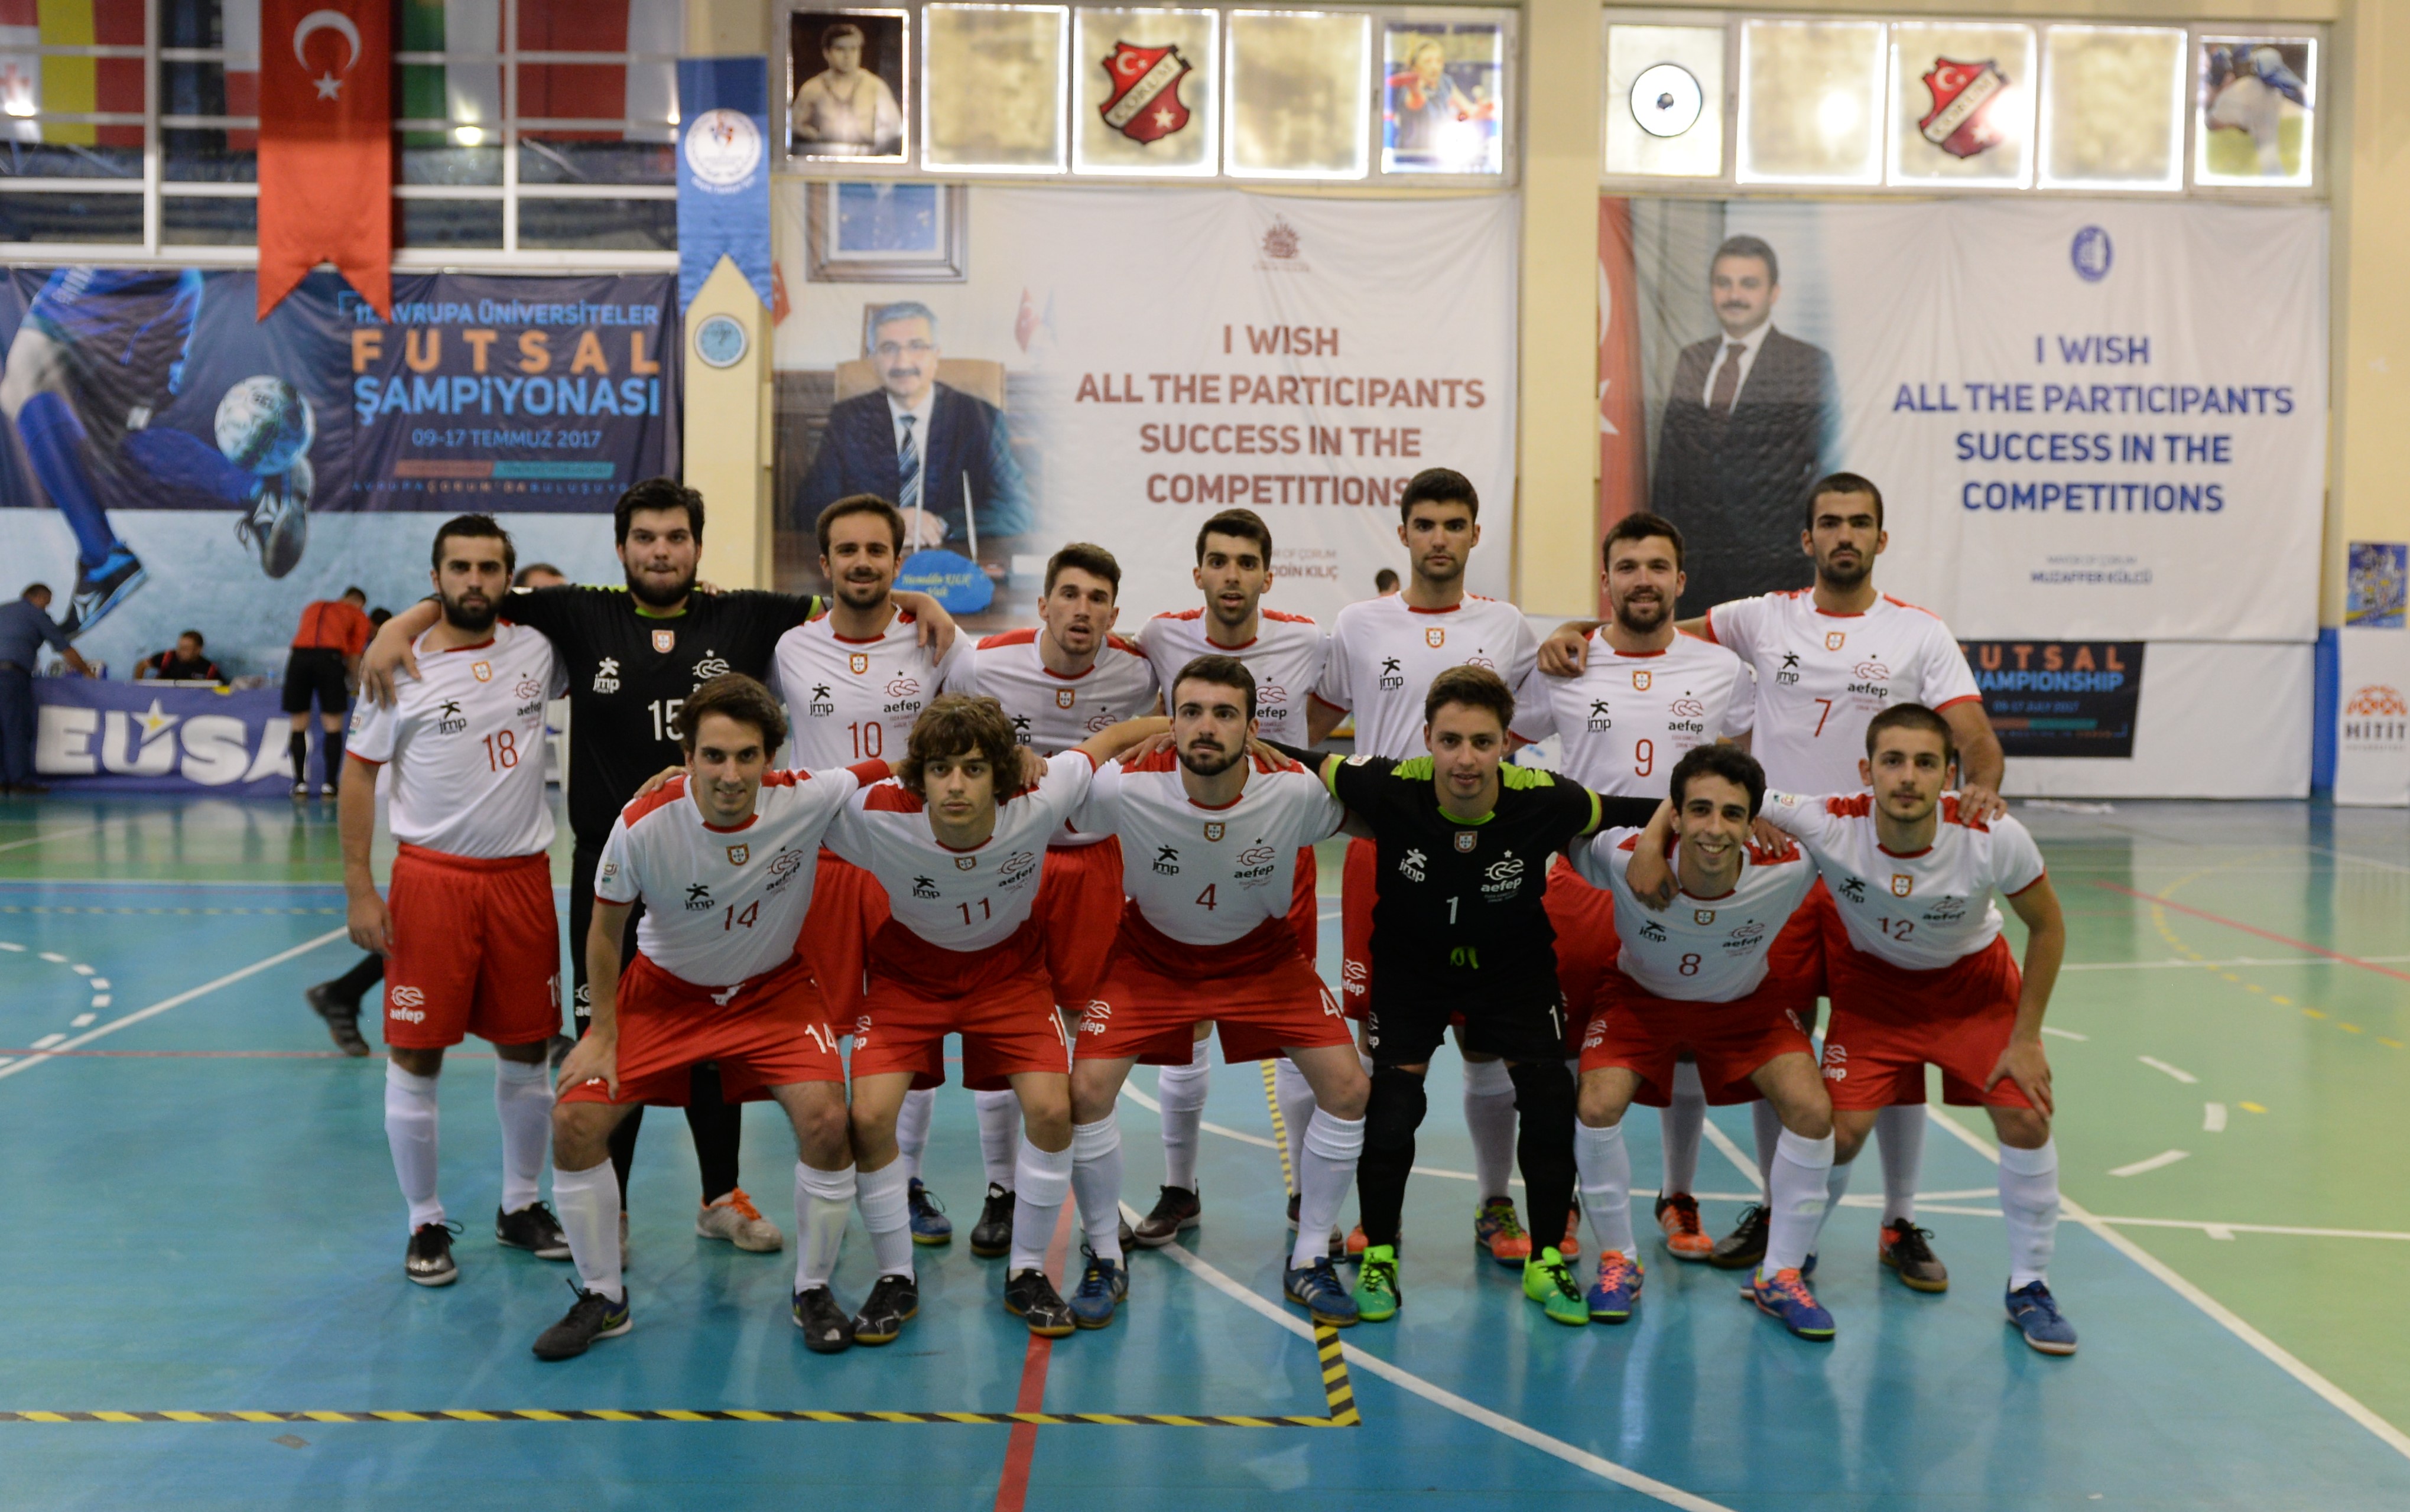 Ivo Monteiro EUSA Futsal 2017 Team